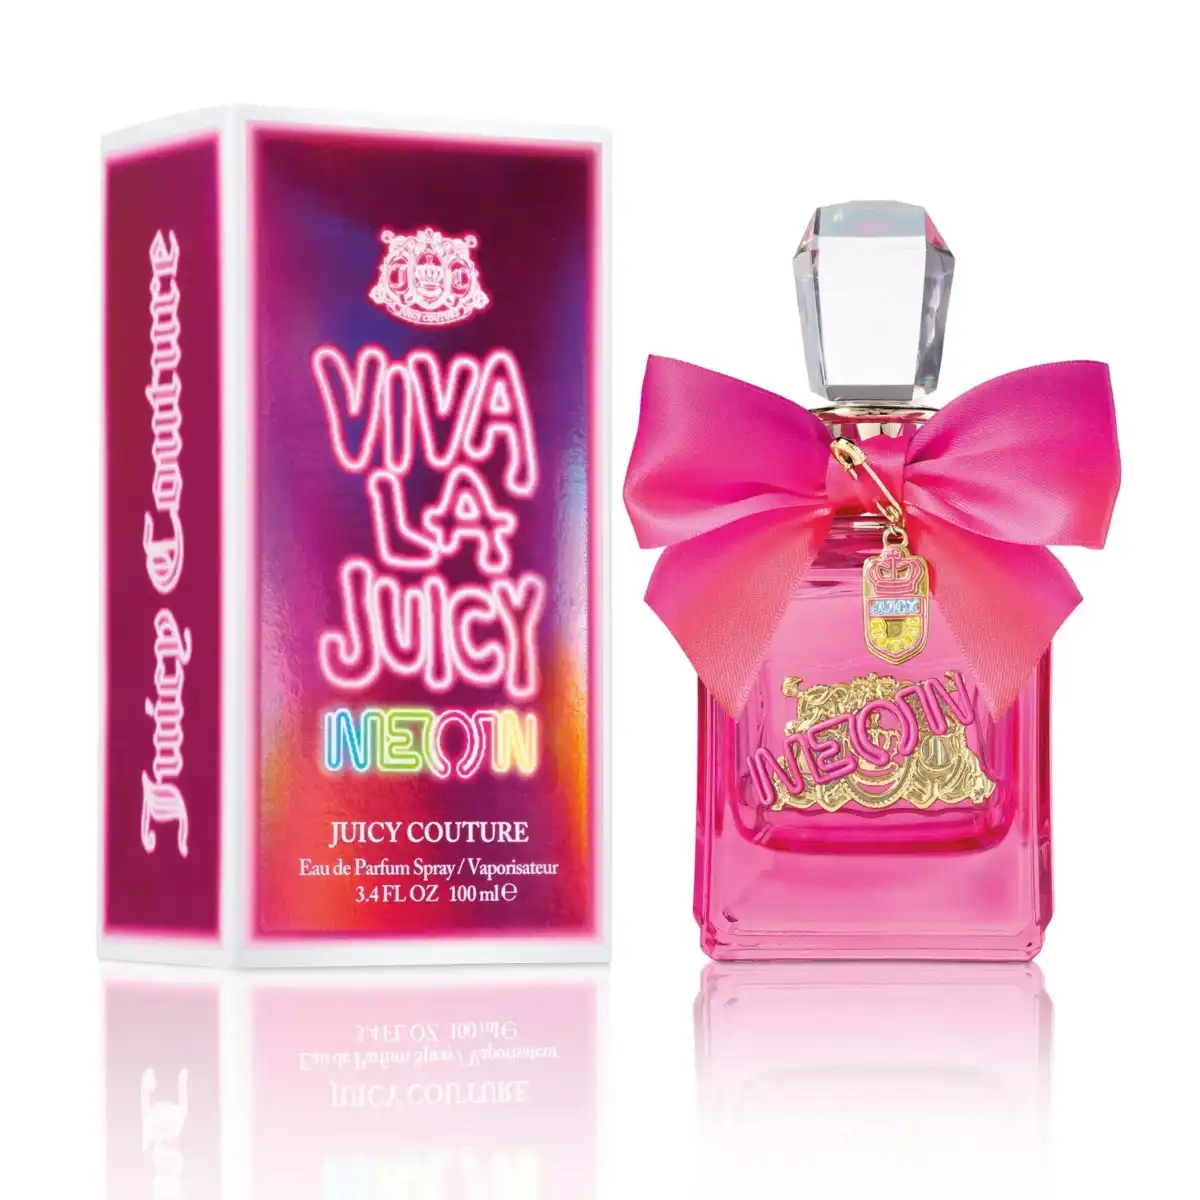 Hình 4 - Juicy Couture Viva La Juicy Neon EDP 100ml